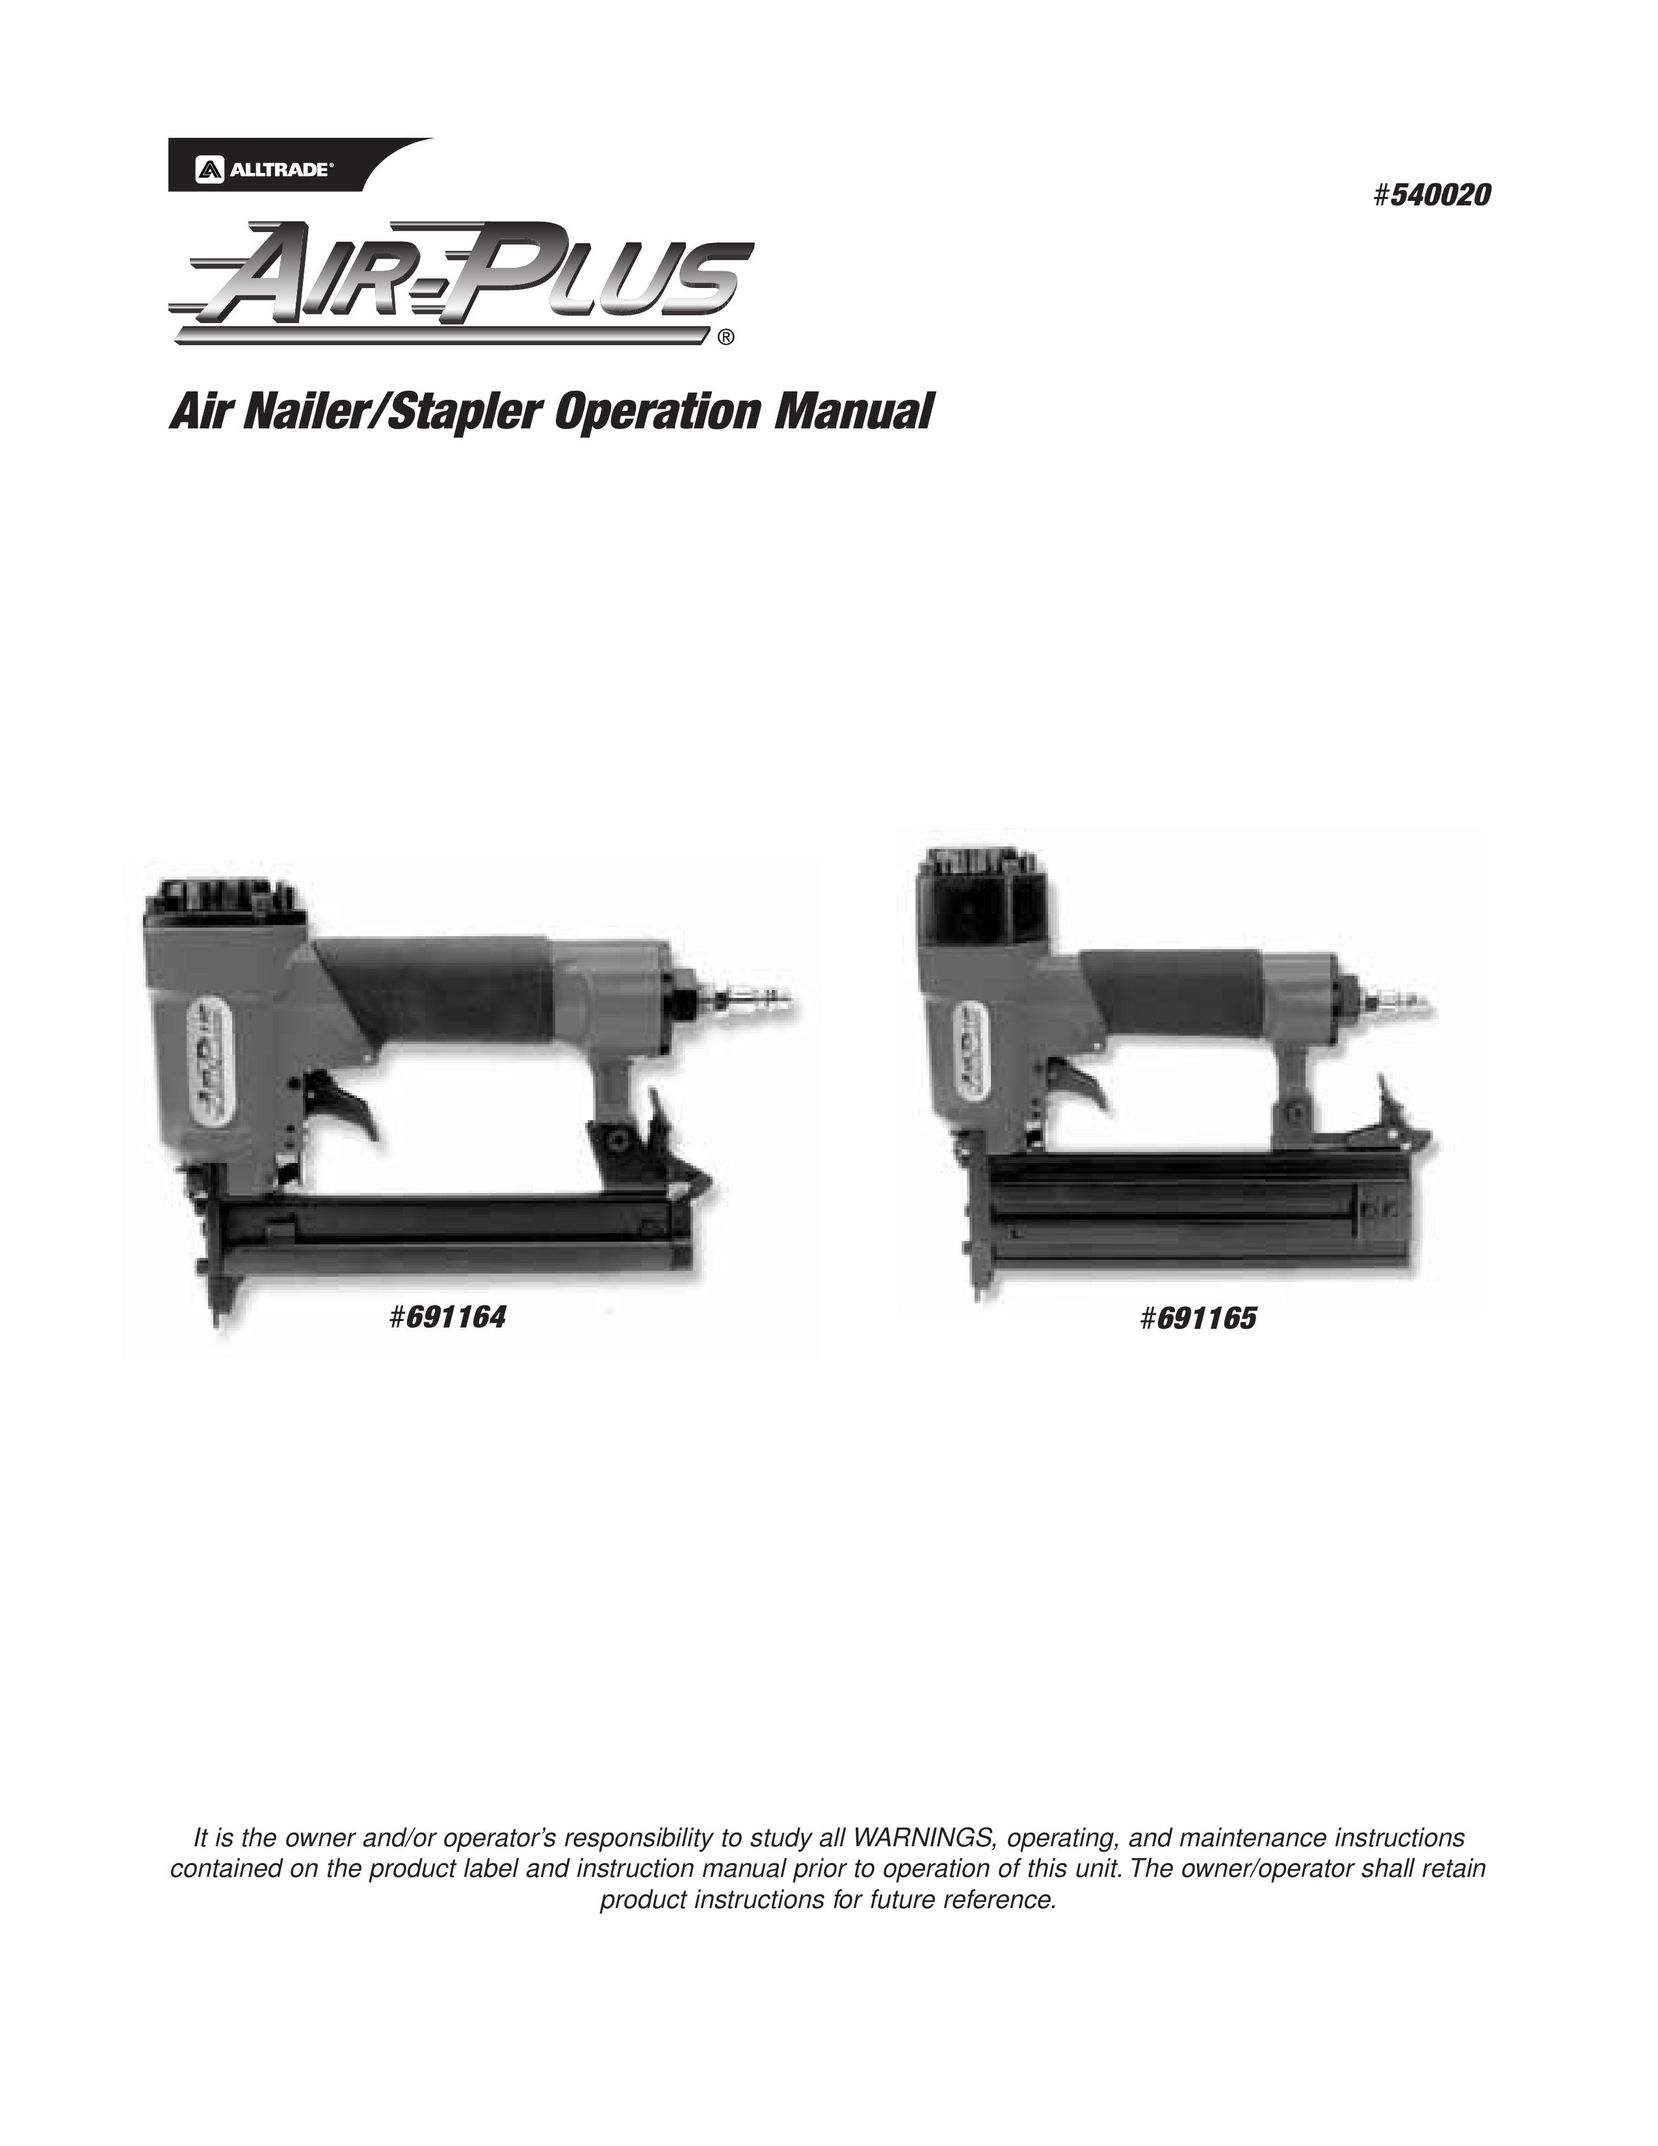 AllTrade 691164 Nail Gun User Manual